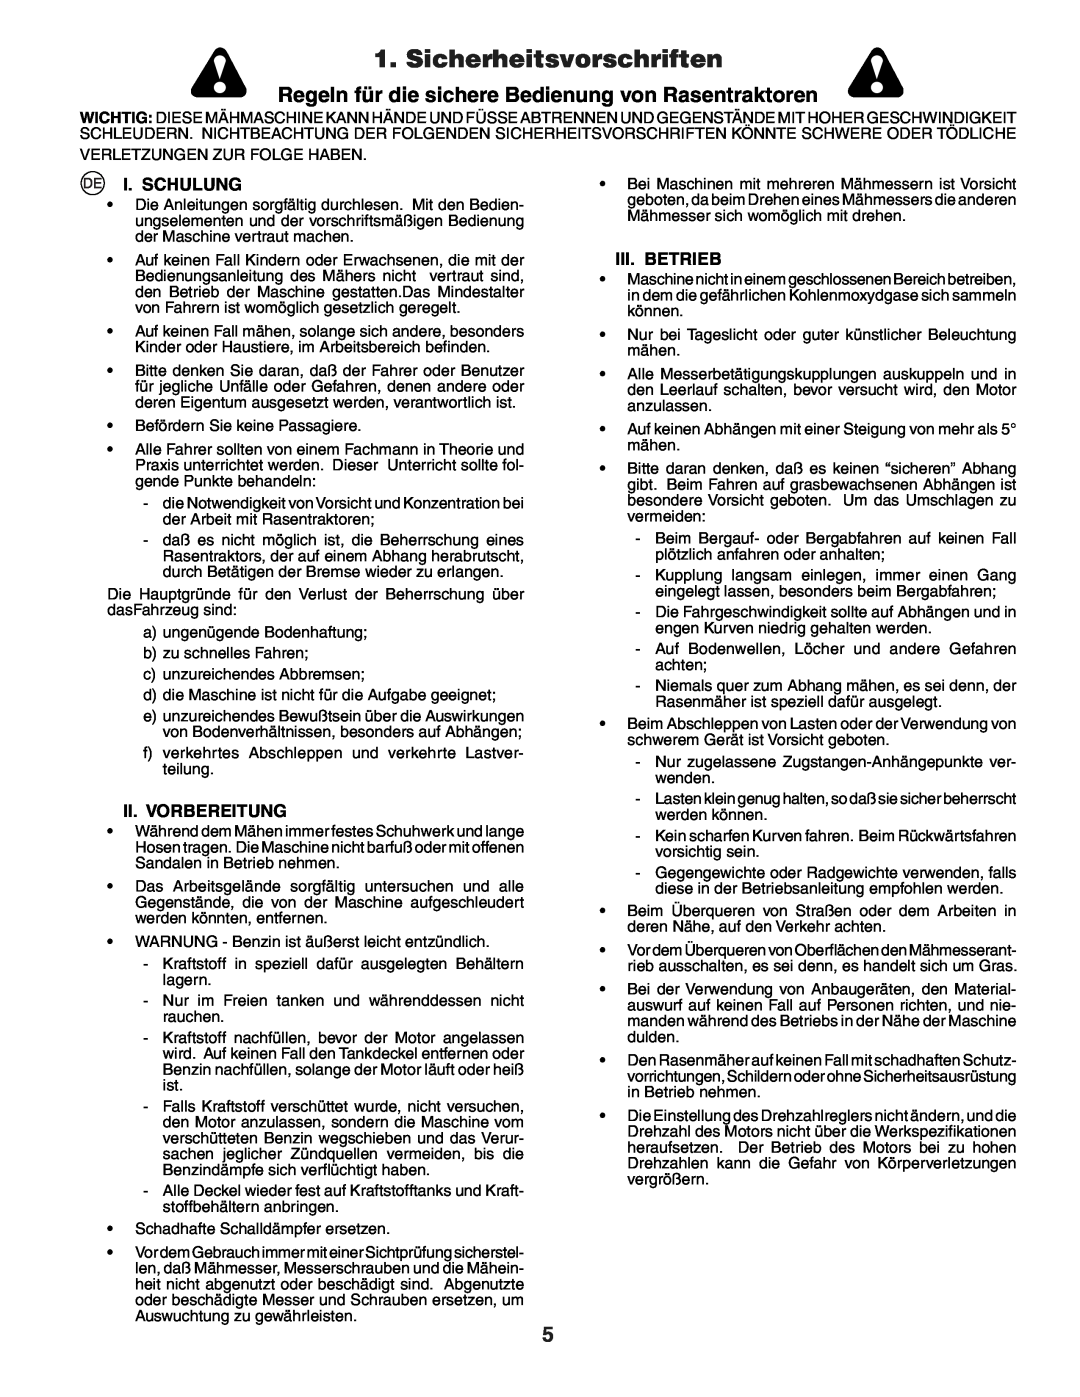 Husqvarna YTH150XP instruction manual Sicherheitsvorschriften, I. Schulung, Ii.Vorbereitung, Iii.Betrieb 